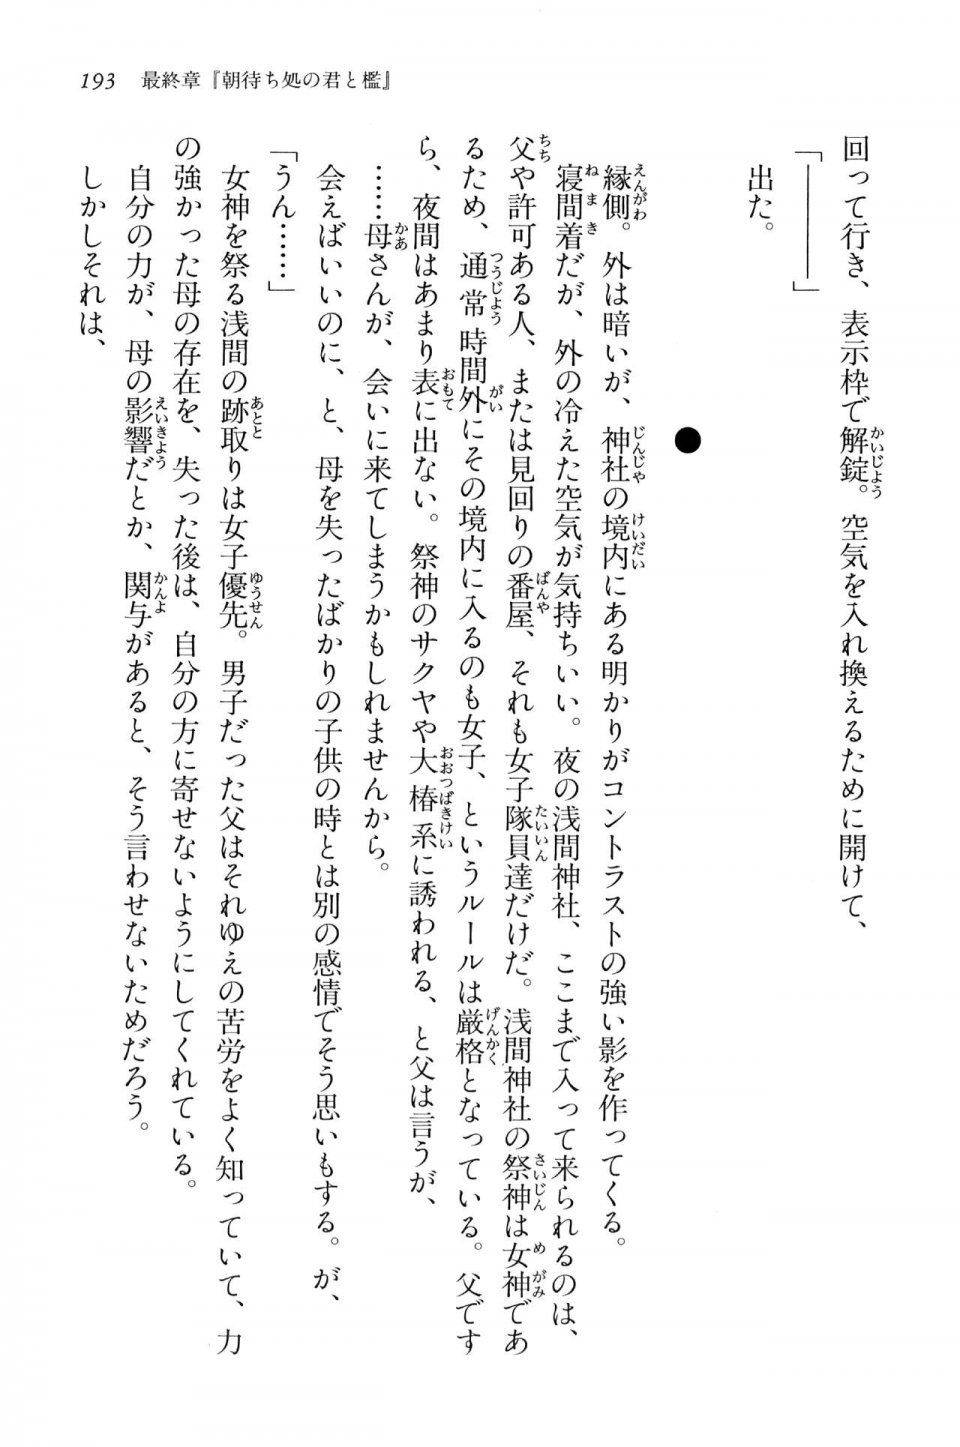 Kyoukai Senjou no Horizon BD Special Mininovel Vol 4(2B) - Photo #197